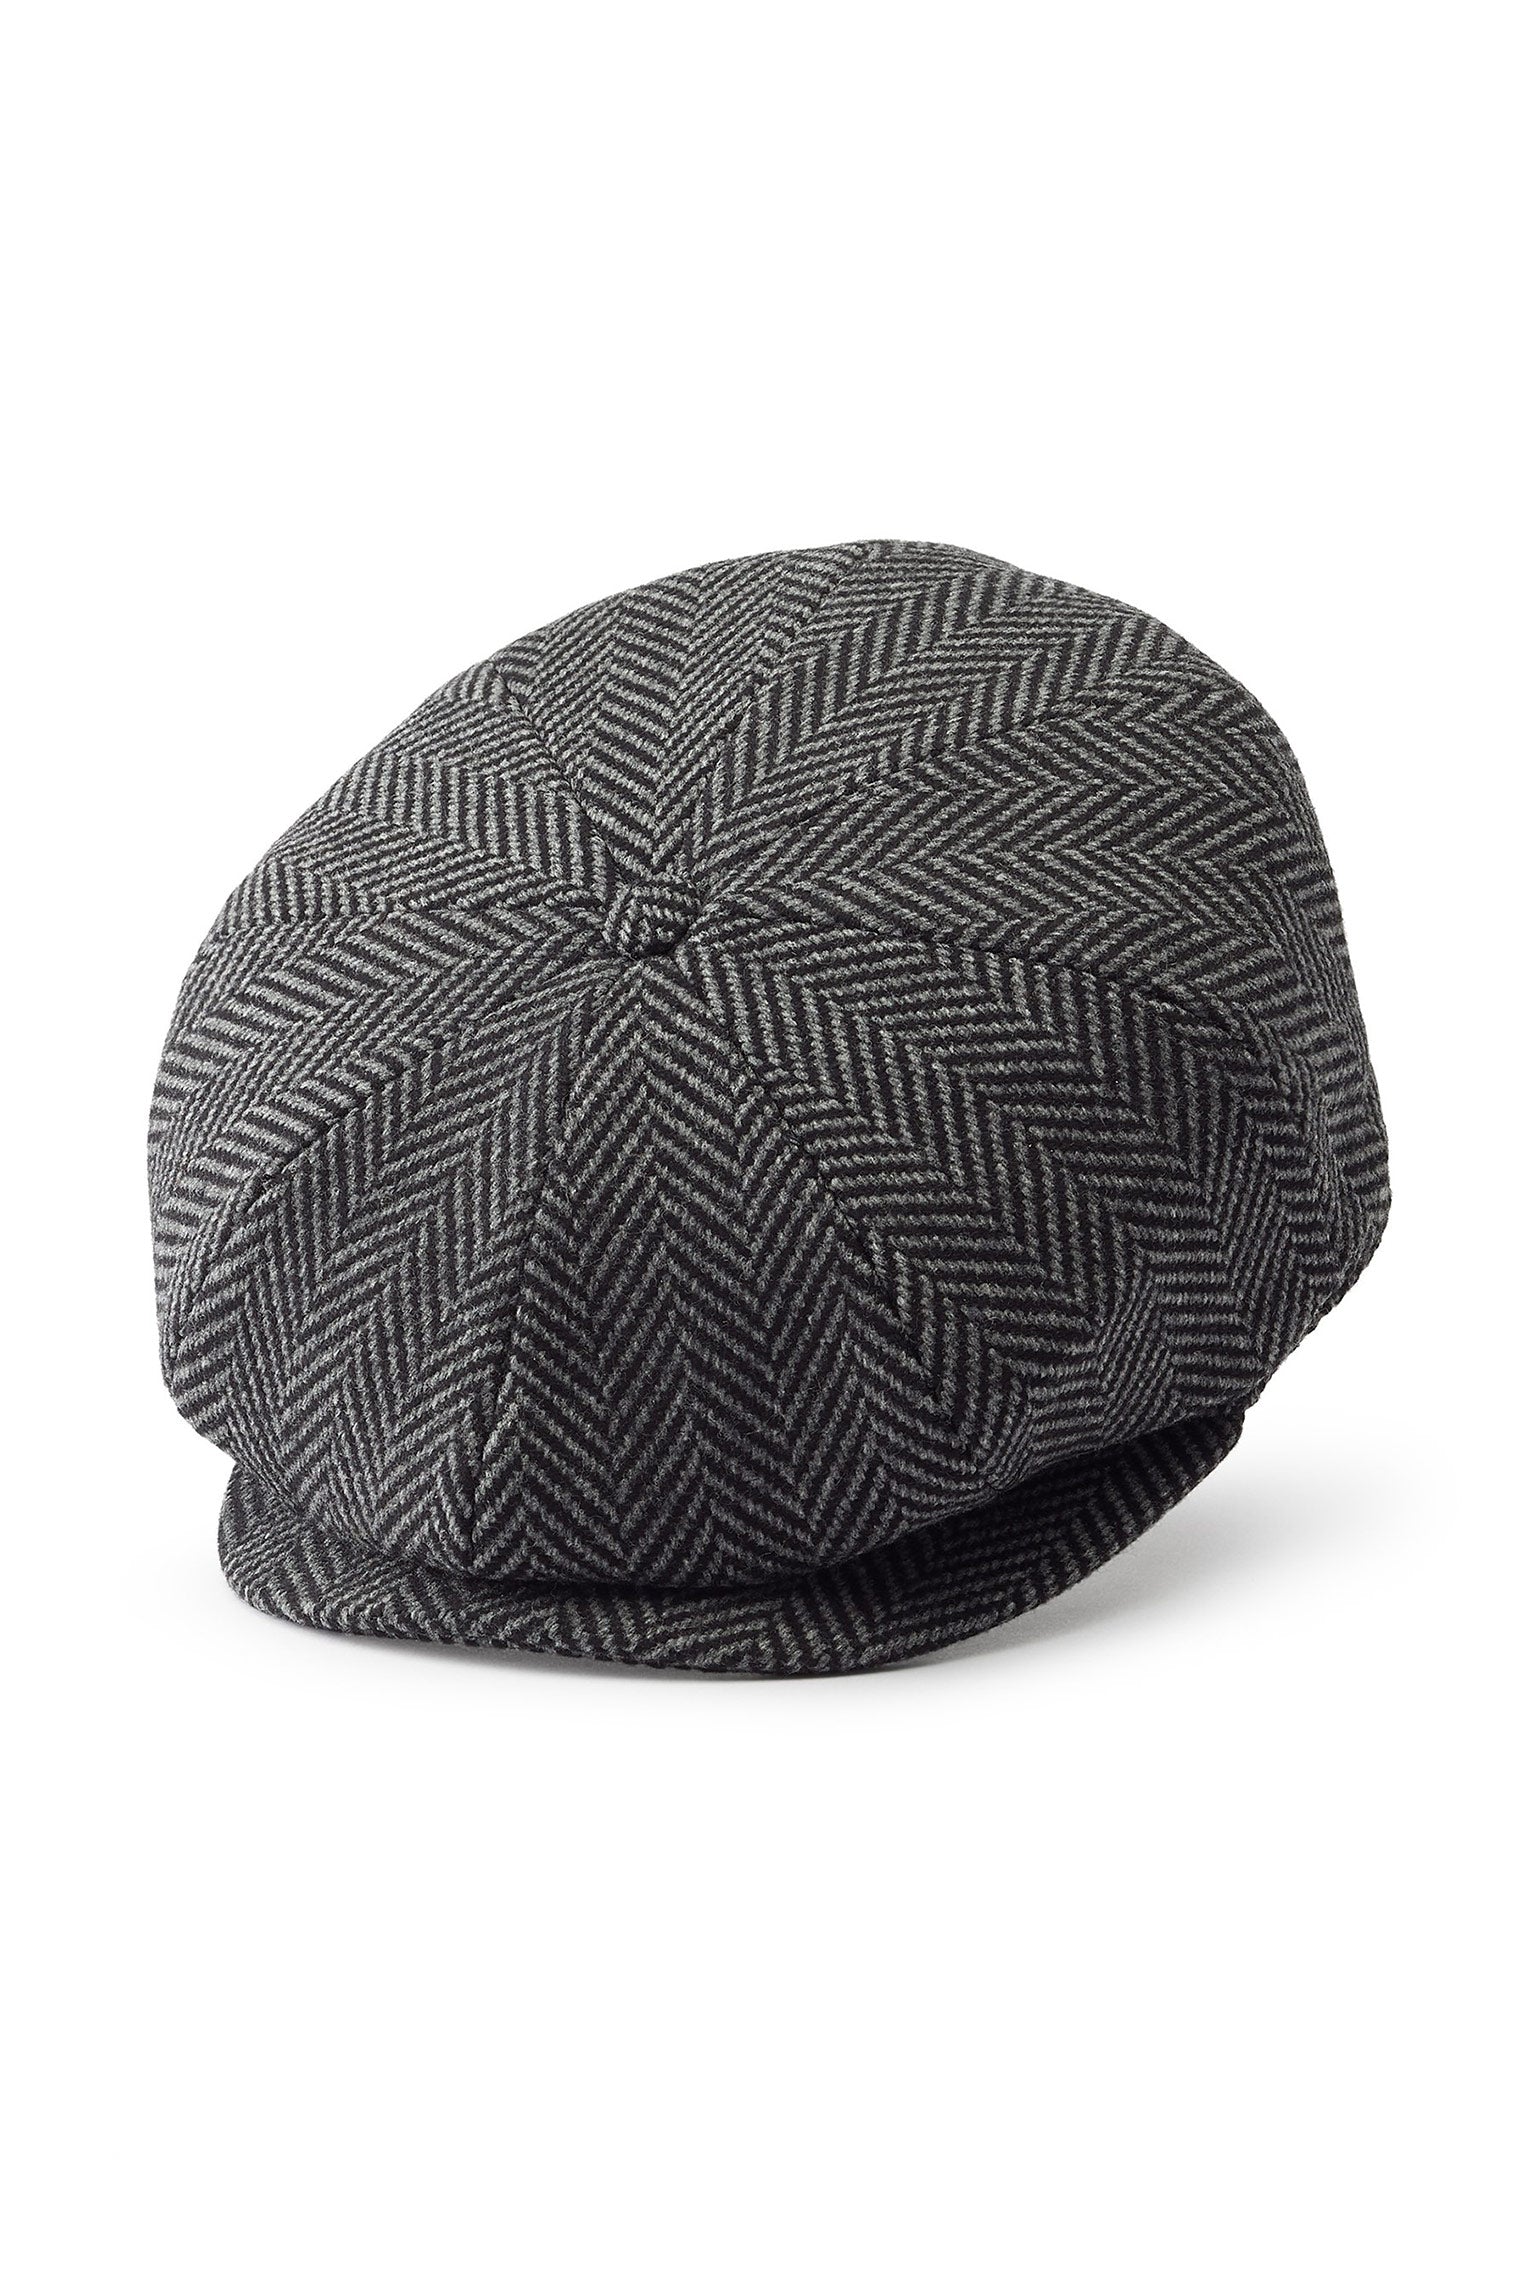 Escorial Wool Tremelo Bakerboy Cap - Escorial Wool Hats - Lock & Co. Hatters London UK